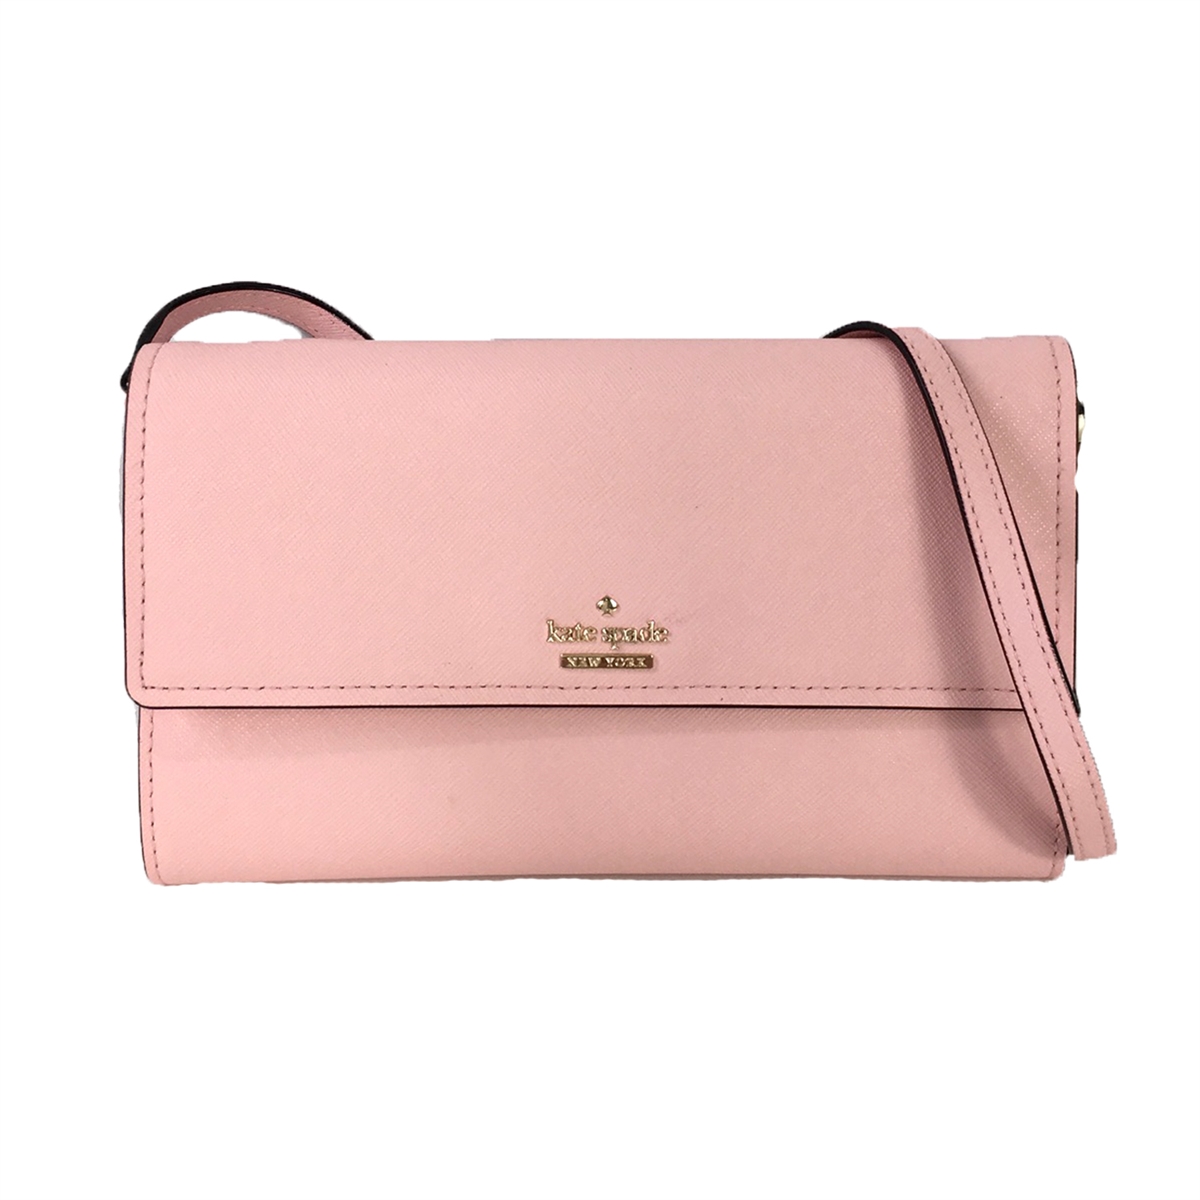 Kate spade pink bag, Women's - Bags & Wallets, Calgary